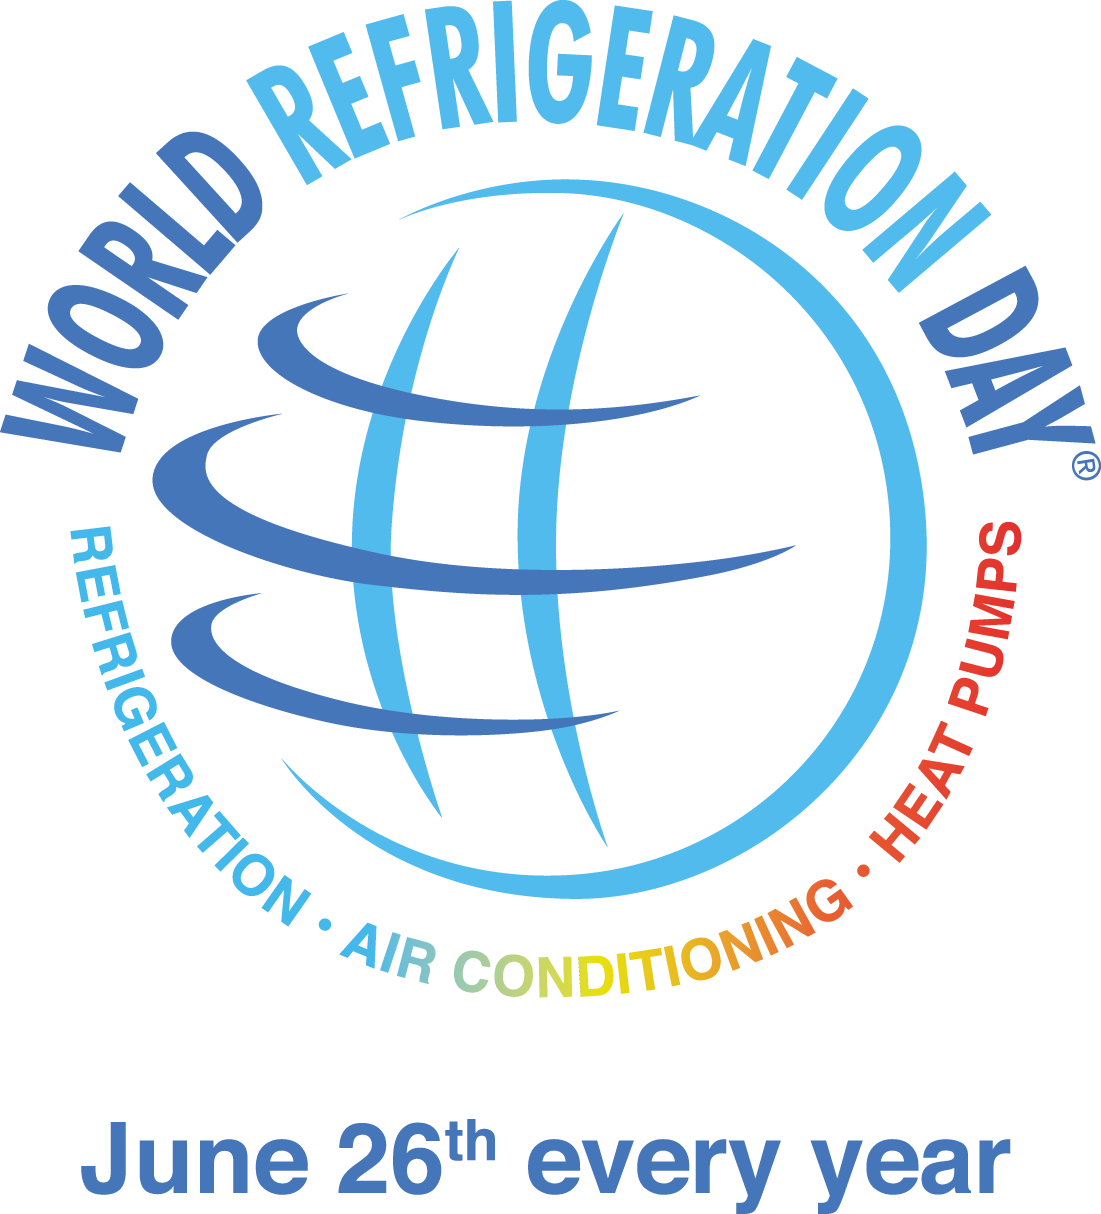 Star Refrigeration celebrates World Refrigeration Day